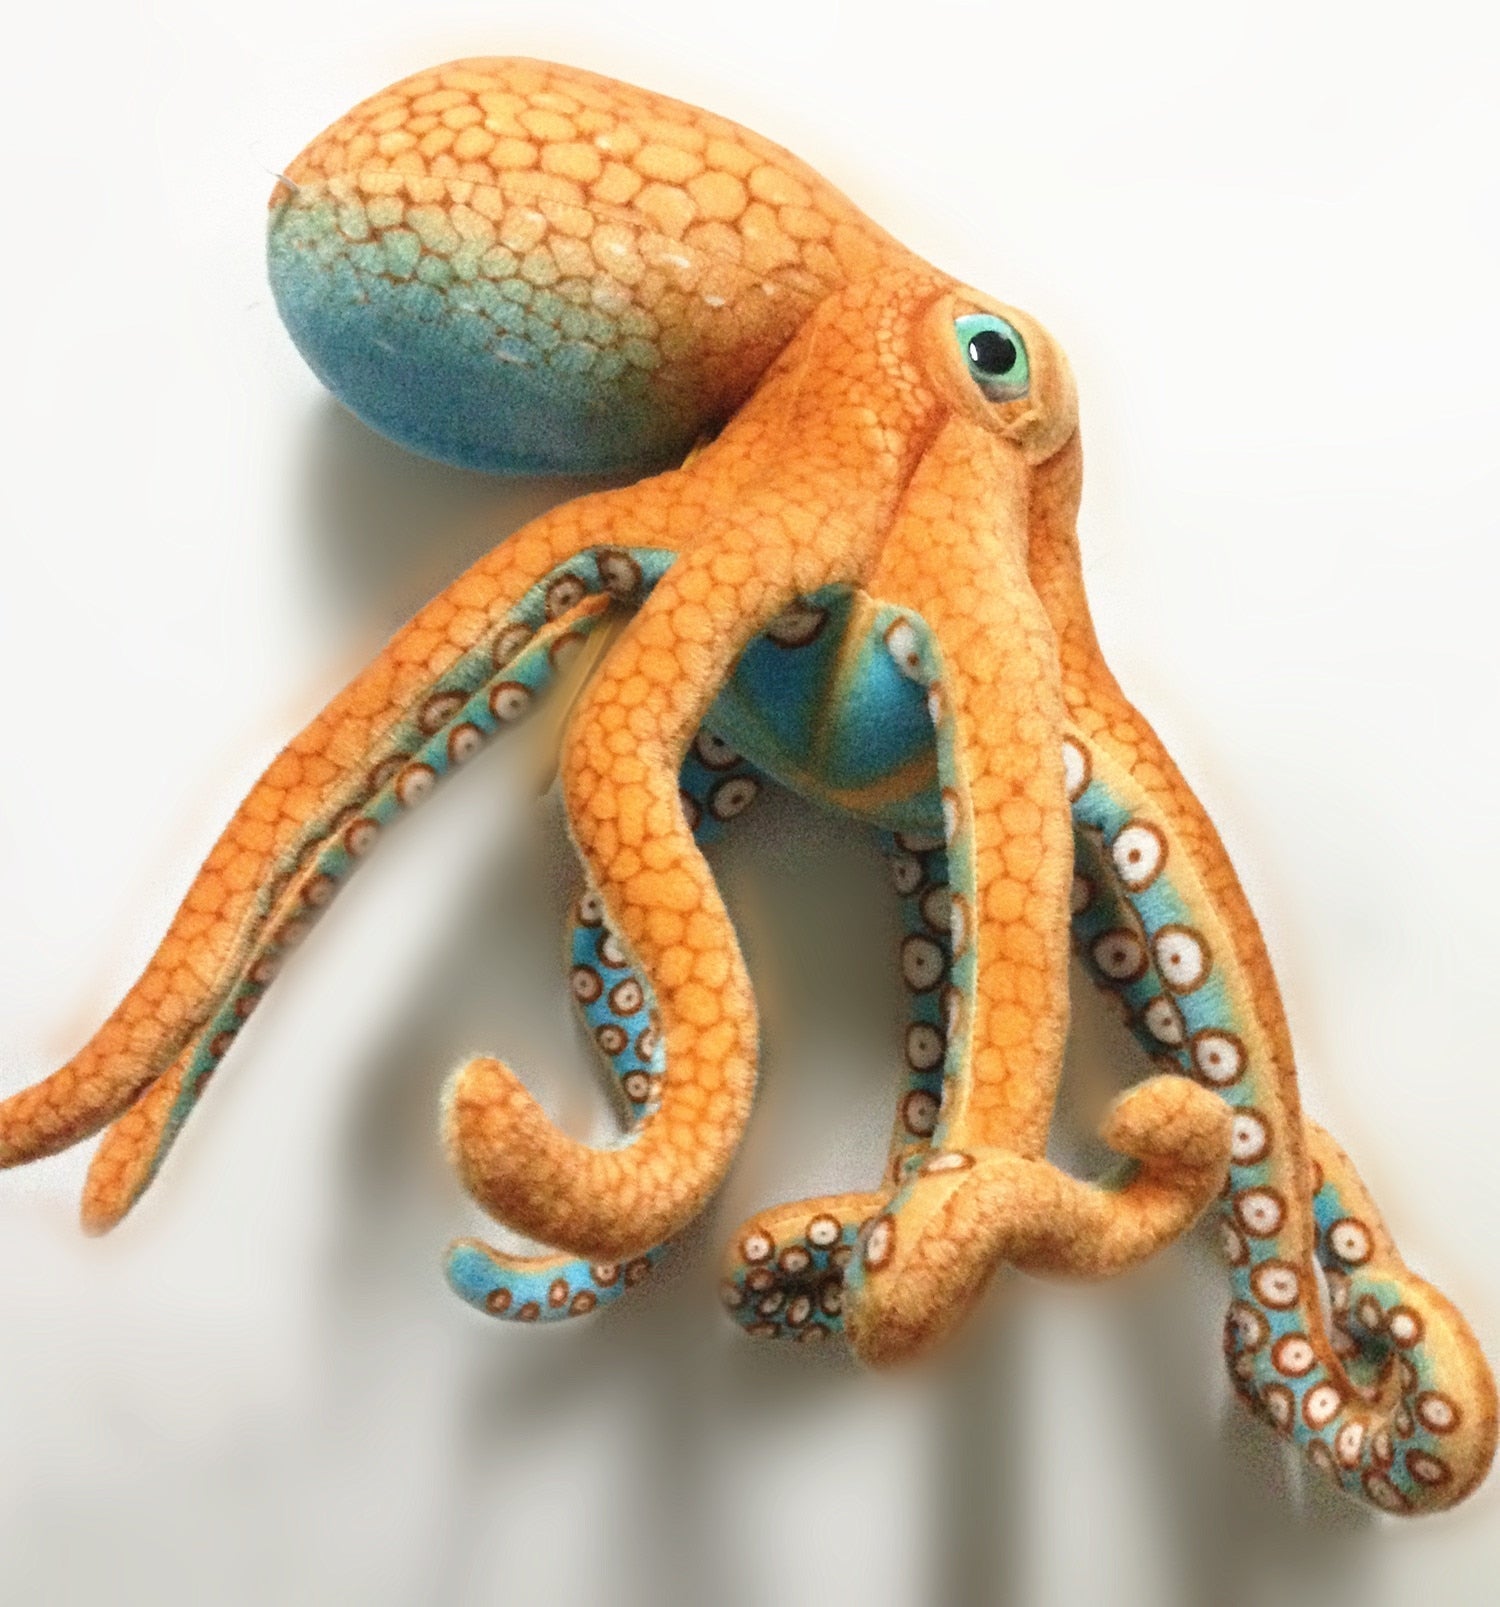 Plush Realistic Common Octopus, 1.1-2.5' | 35-75 cm Plushie Produce